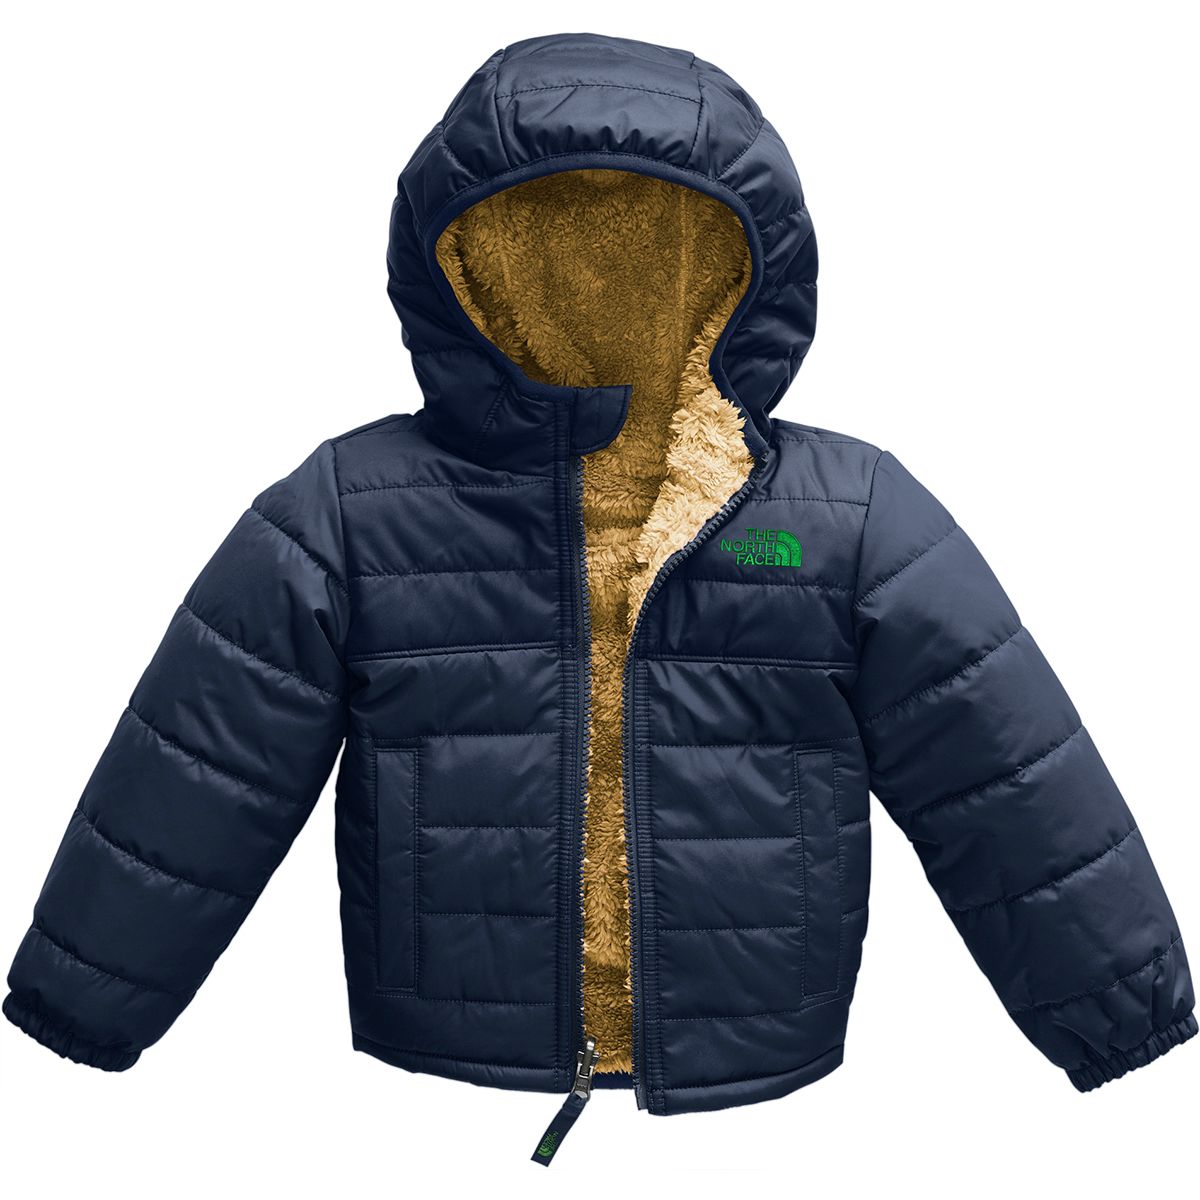 chimborazo reversible jacket toddler